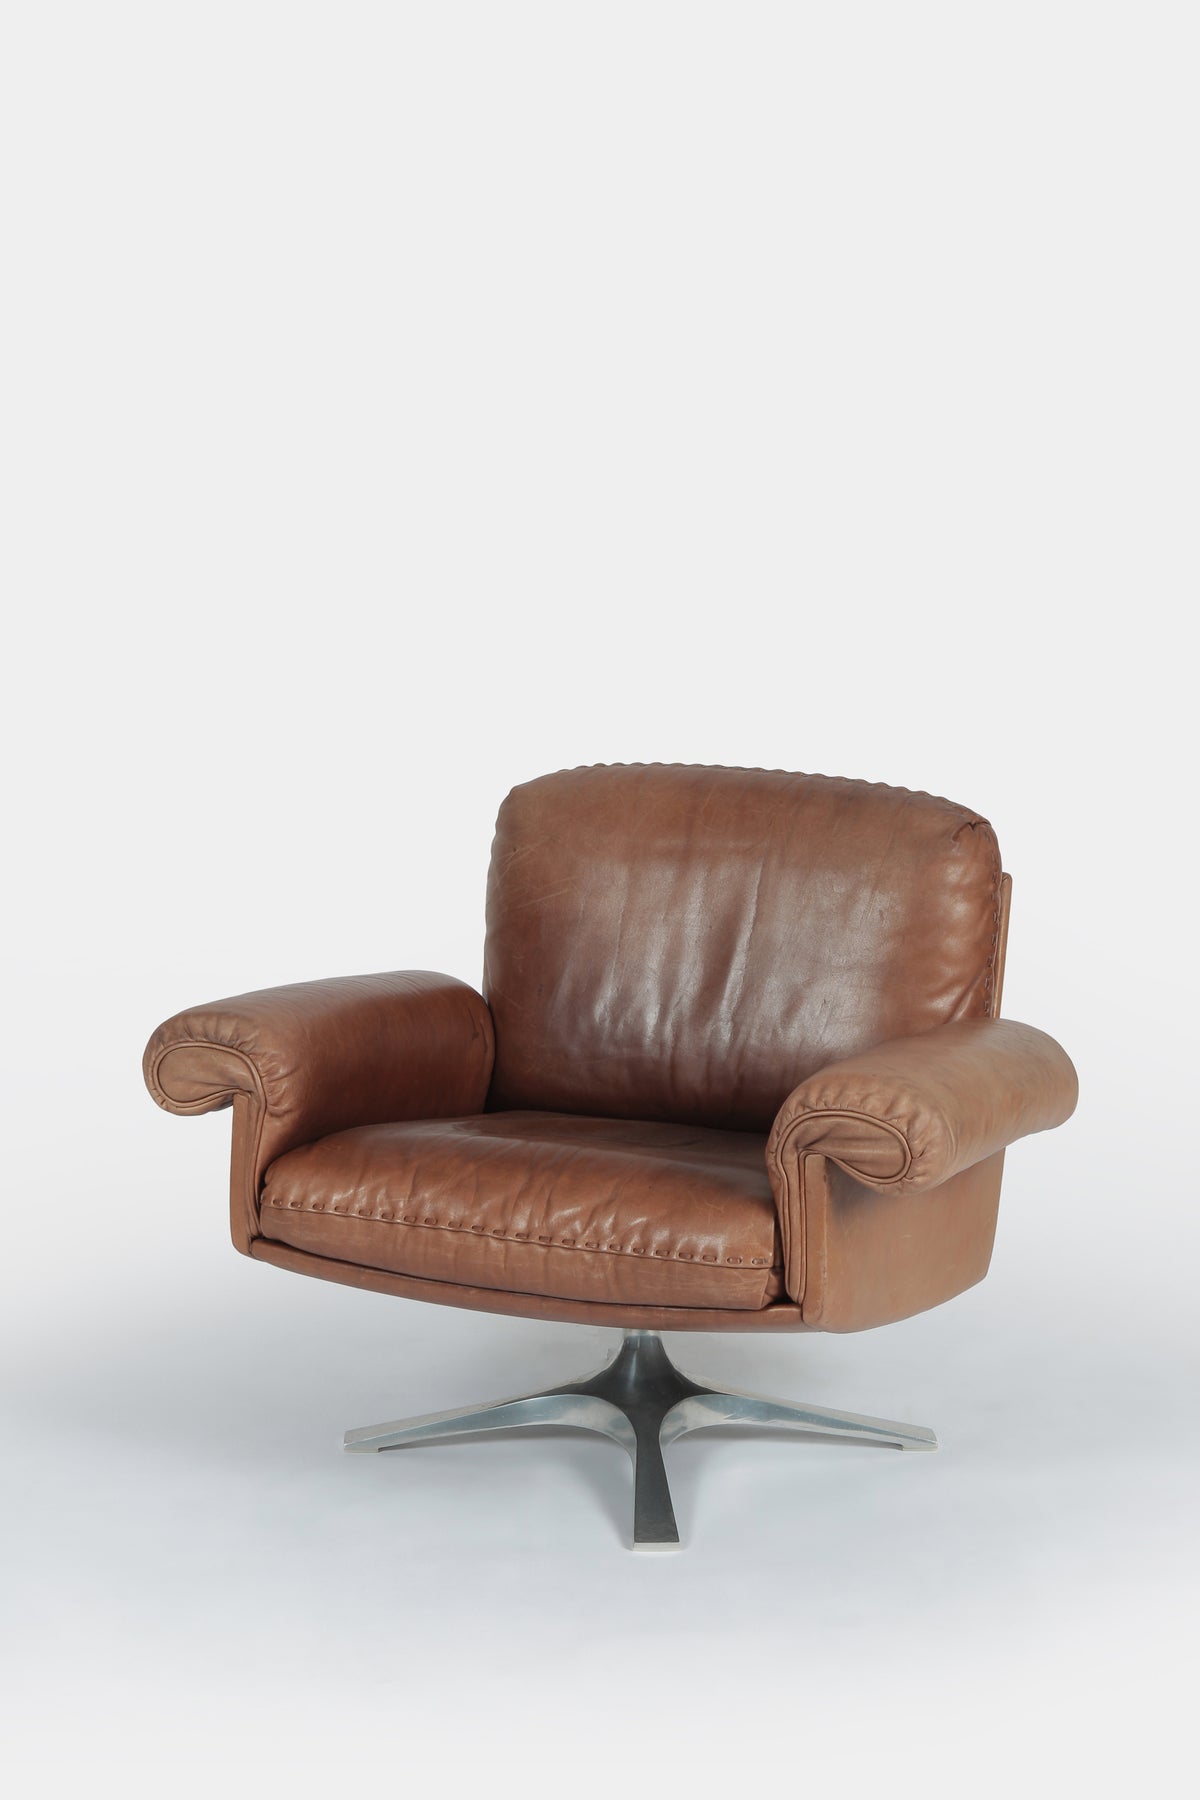 De Sede DS-31 single armchair 70s